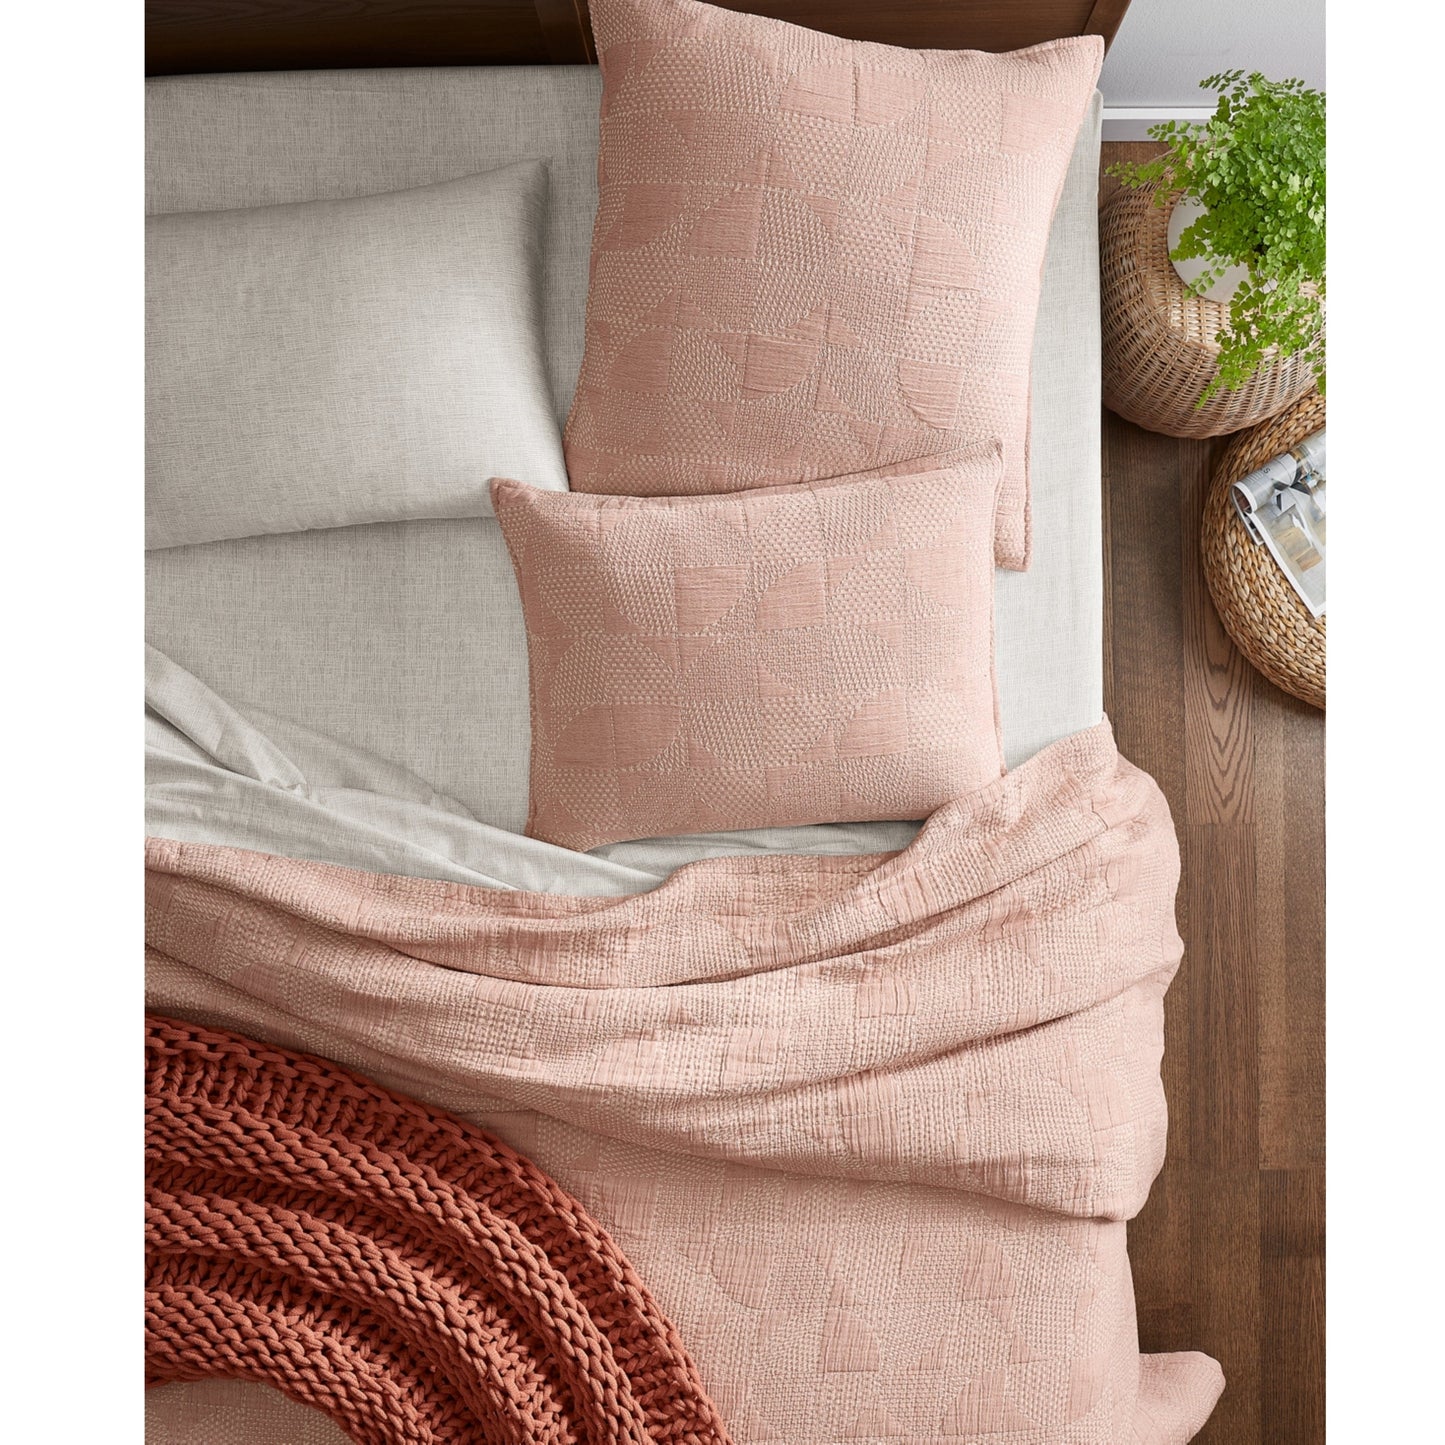 OAKE Comforter/Quilt/Duvet Full / Queen / Pink OAKE - Geo Stitch Coverlet - Full / Queen